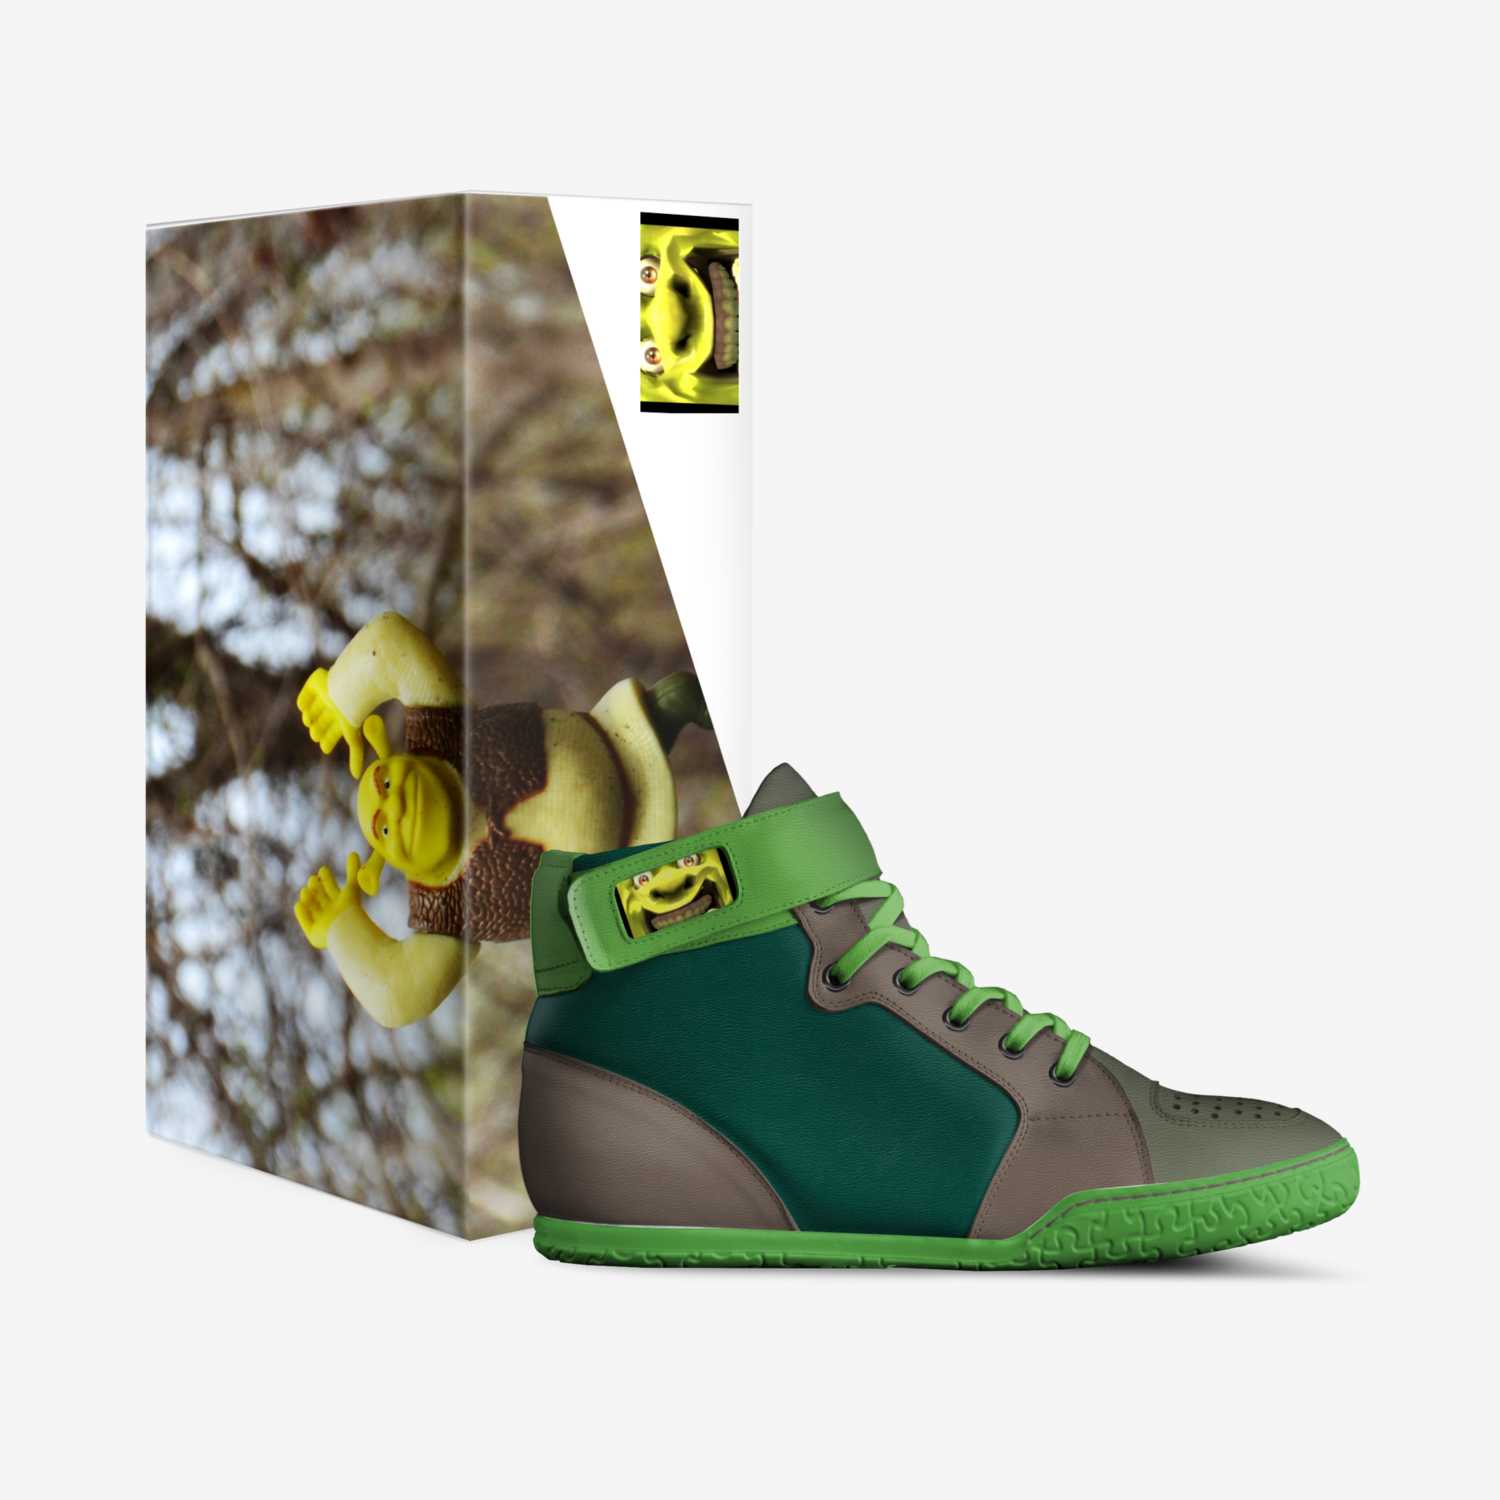 Shrektacular custom made in Italy shoes by Shrek Ghandi | Box view